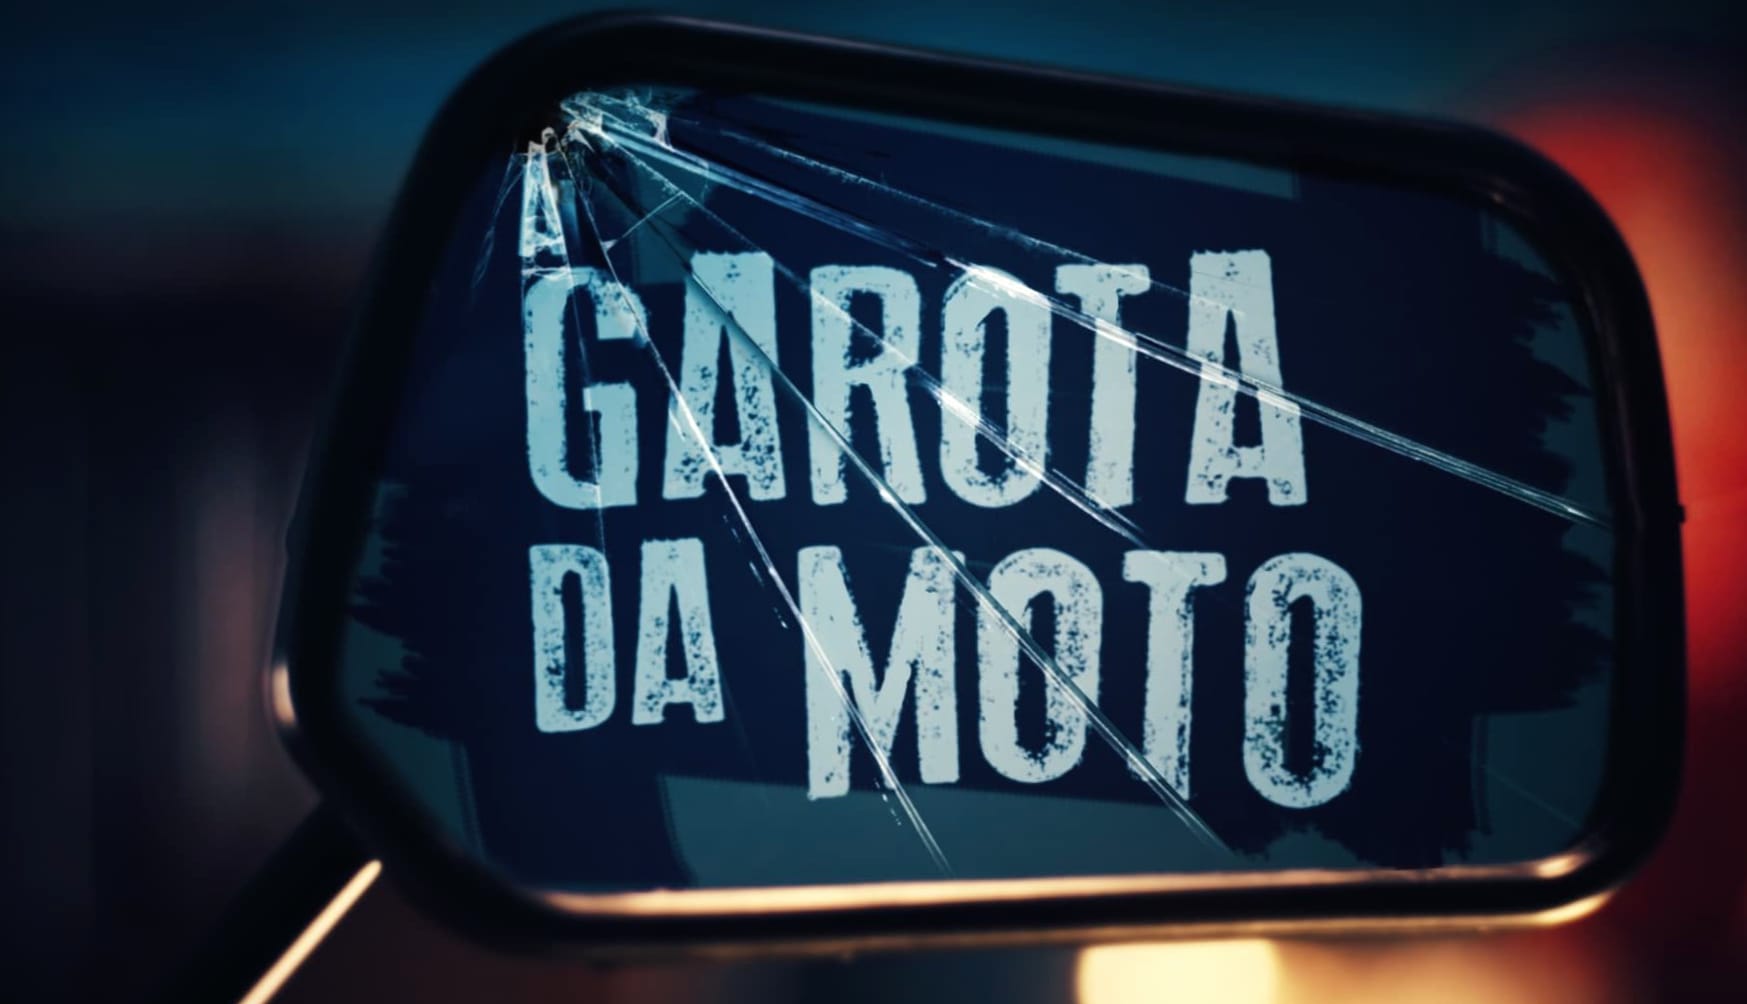 A Garota da Moto wallpapers HD quality